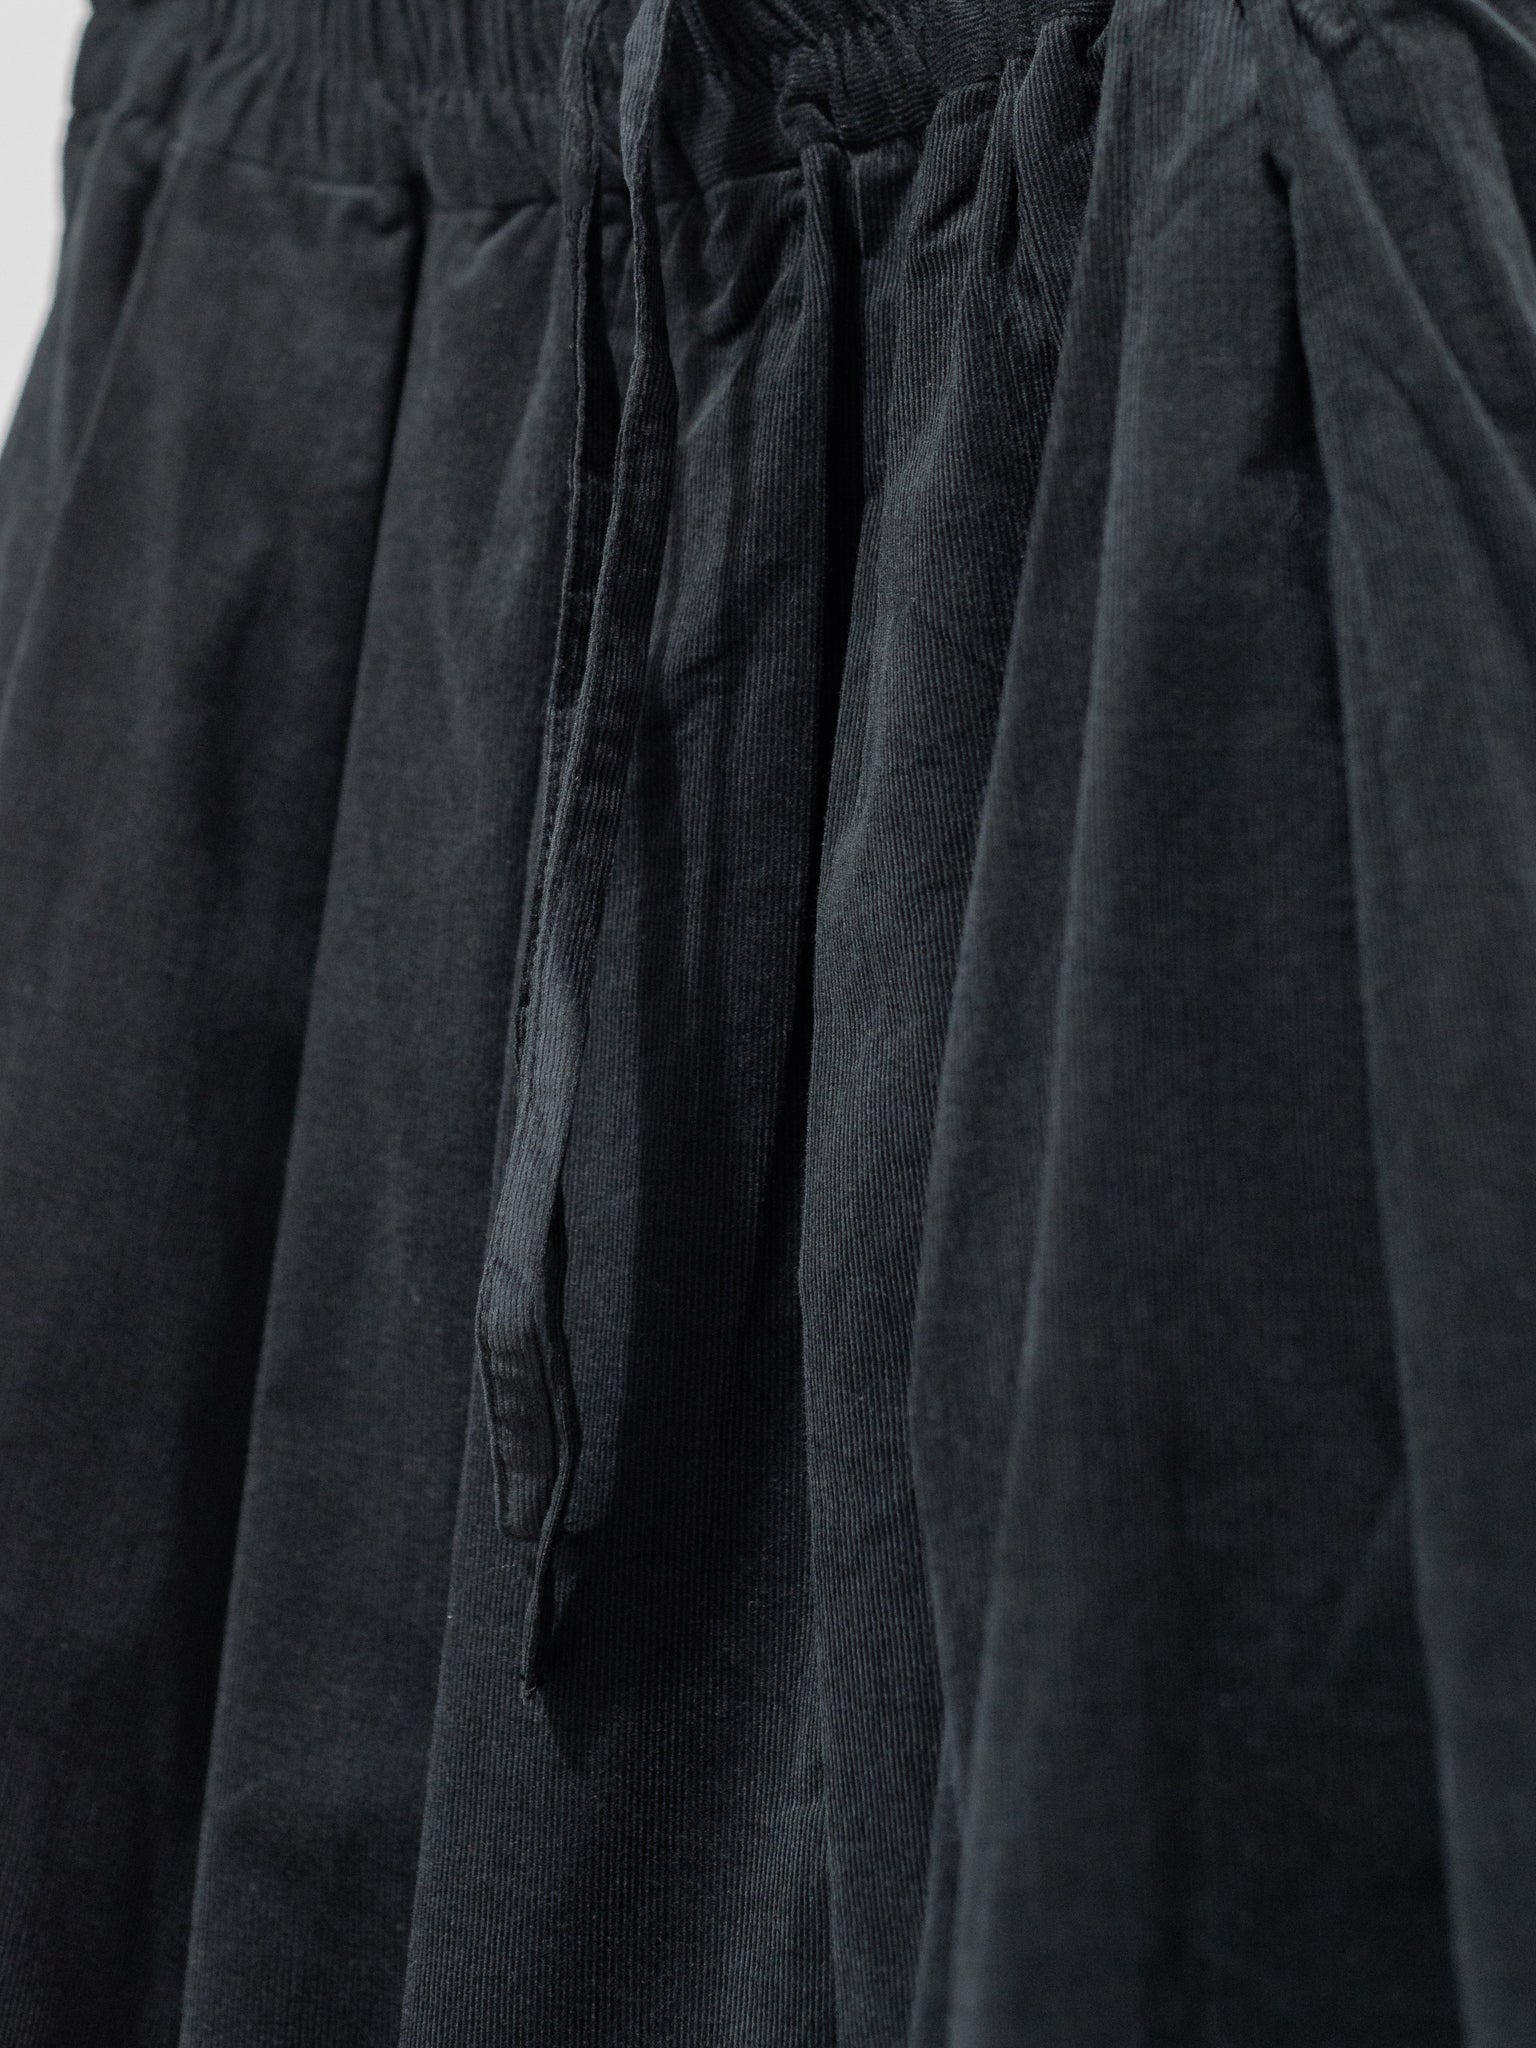 Namu Shop - ICHI Corduroy Balloon Skirt - Black